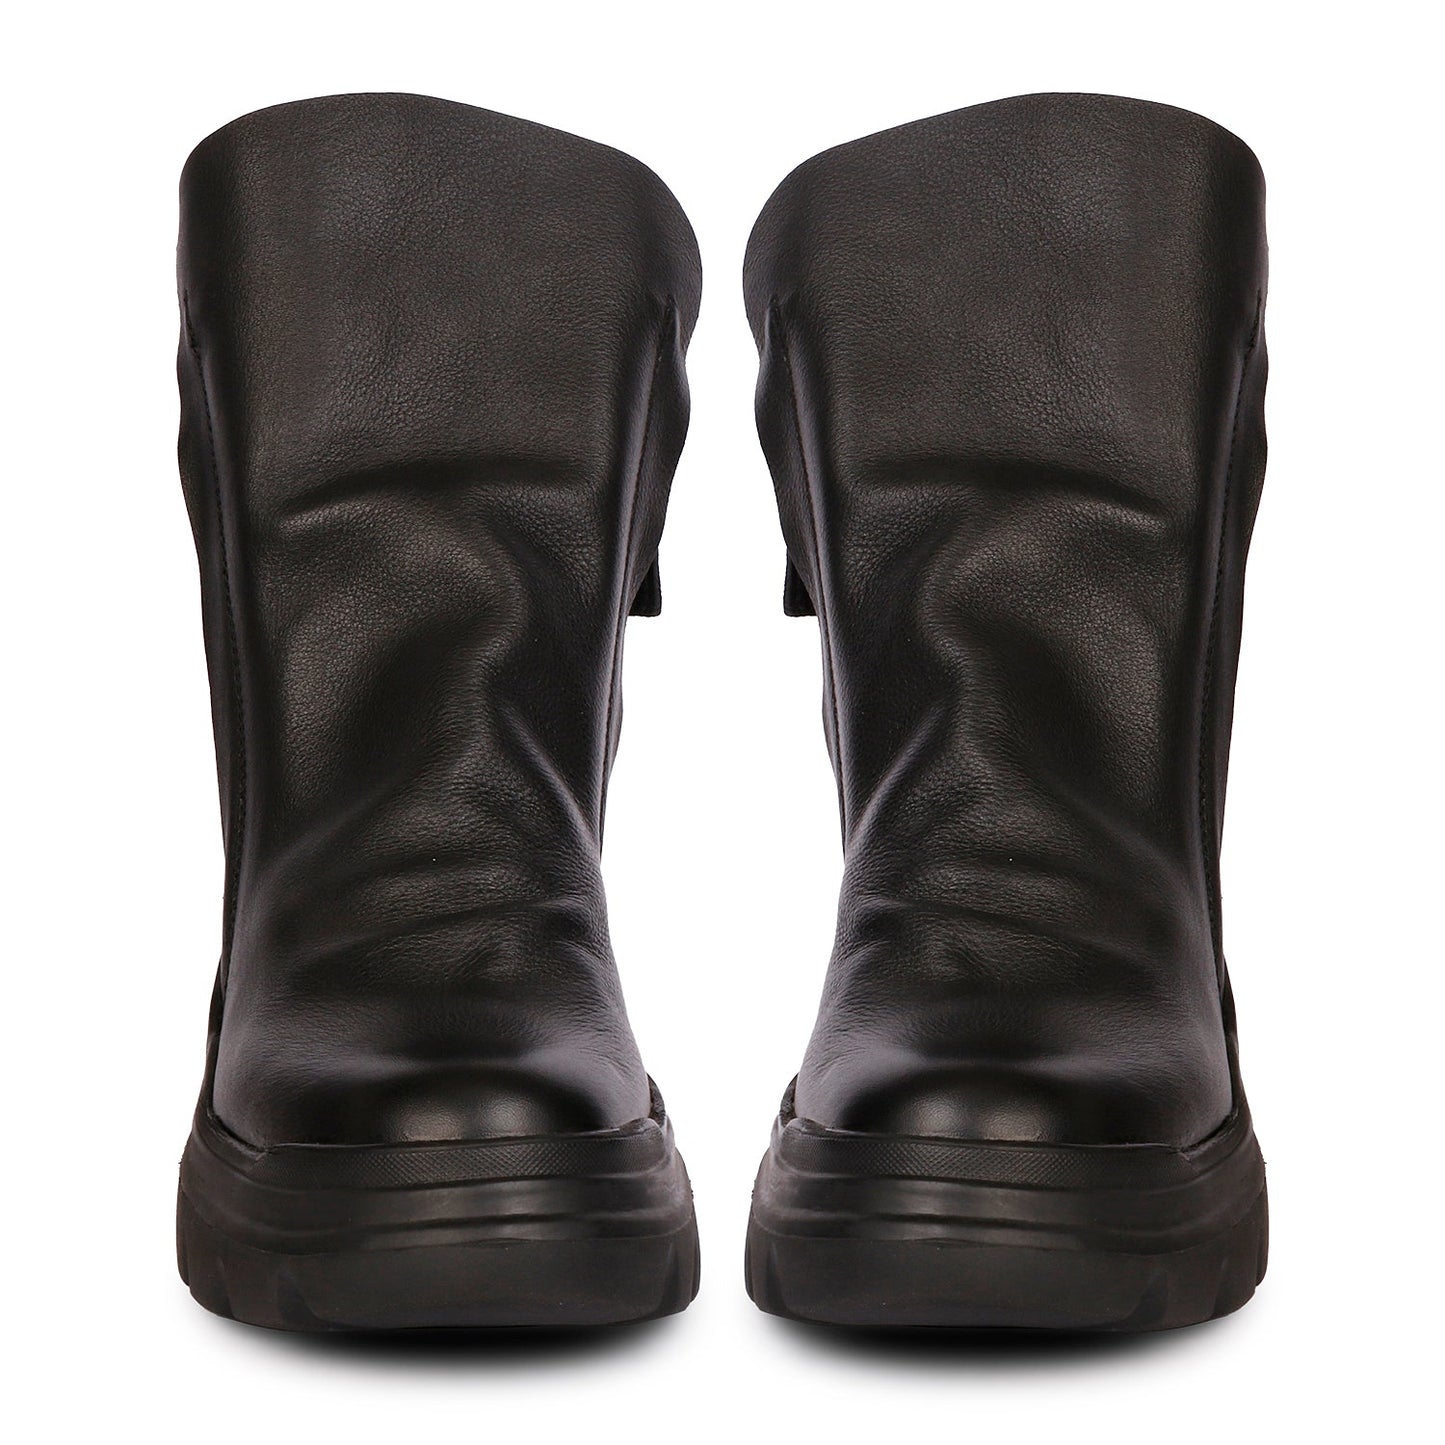 Hayden Leather Boots - Black